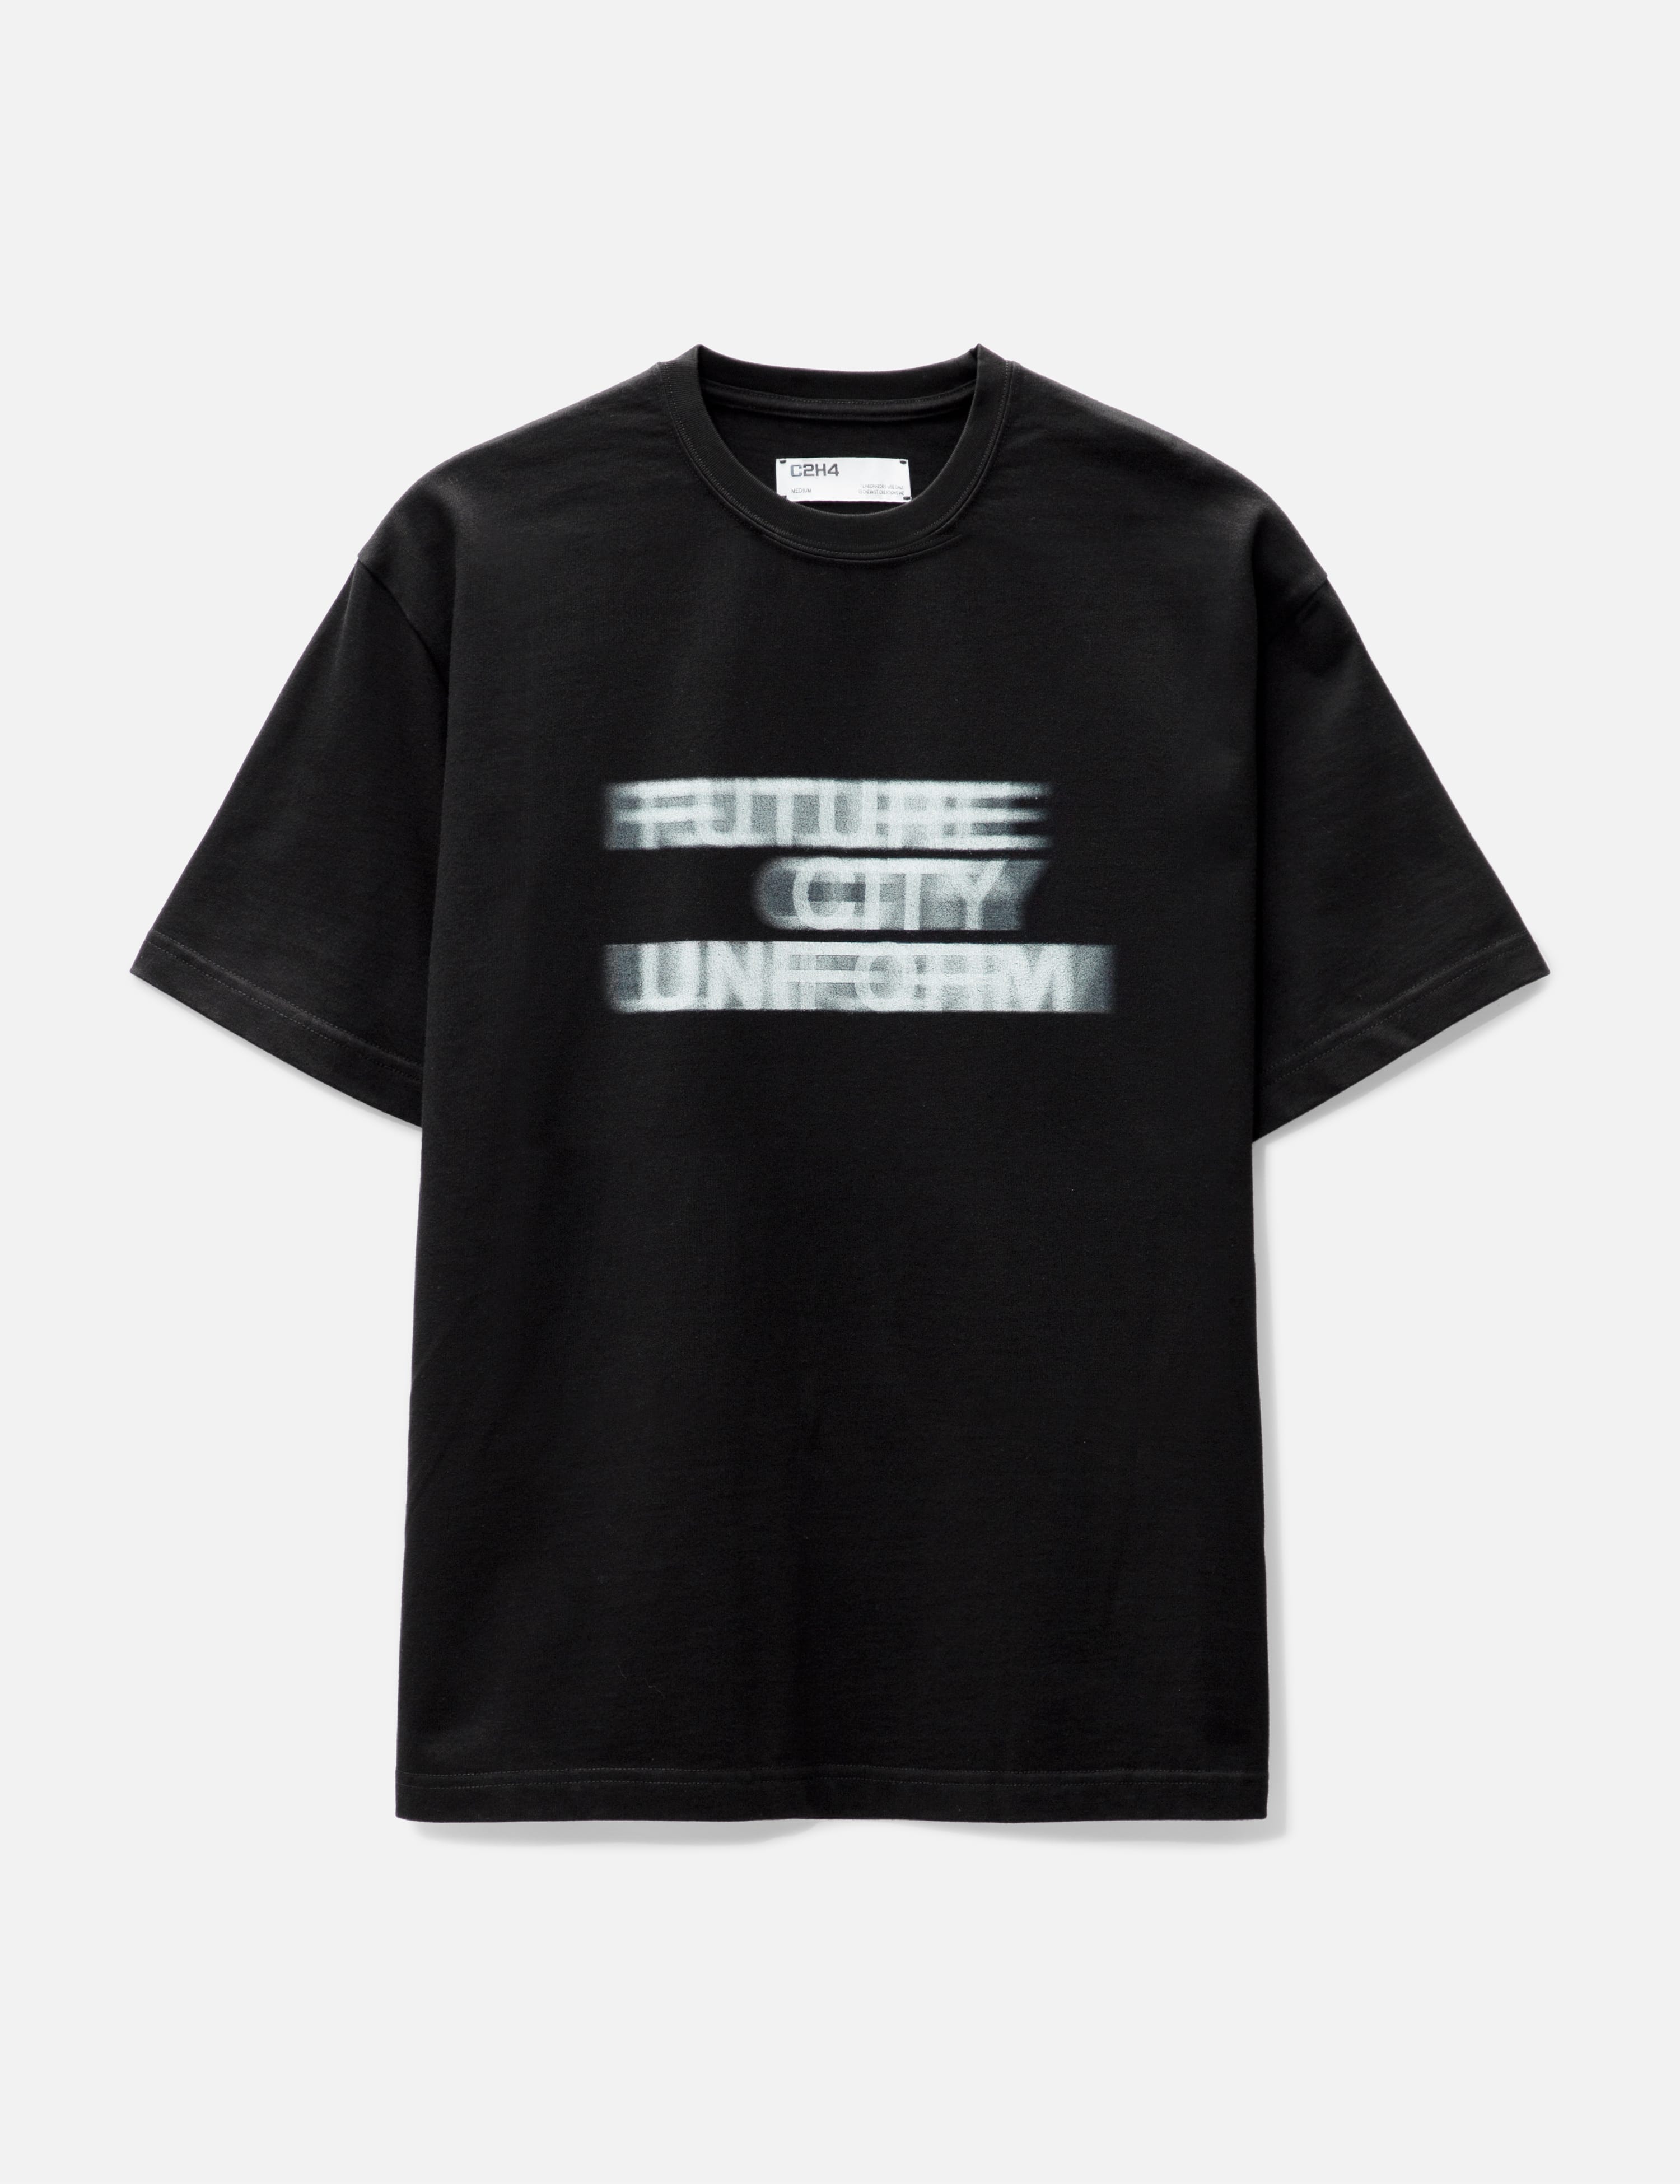 C2H4 “Future City Uniform” T-shirt